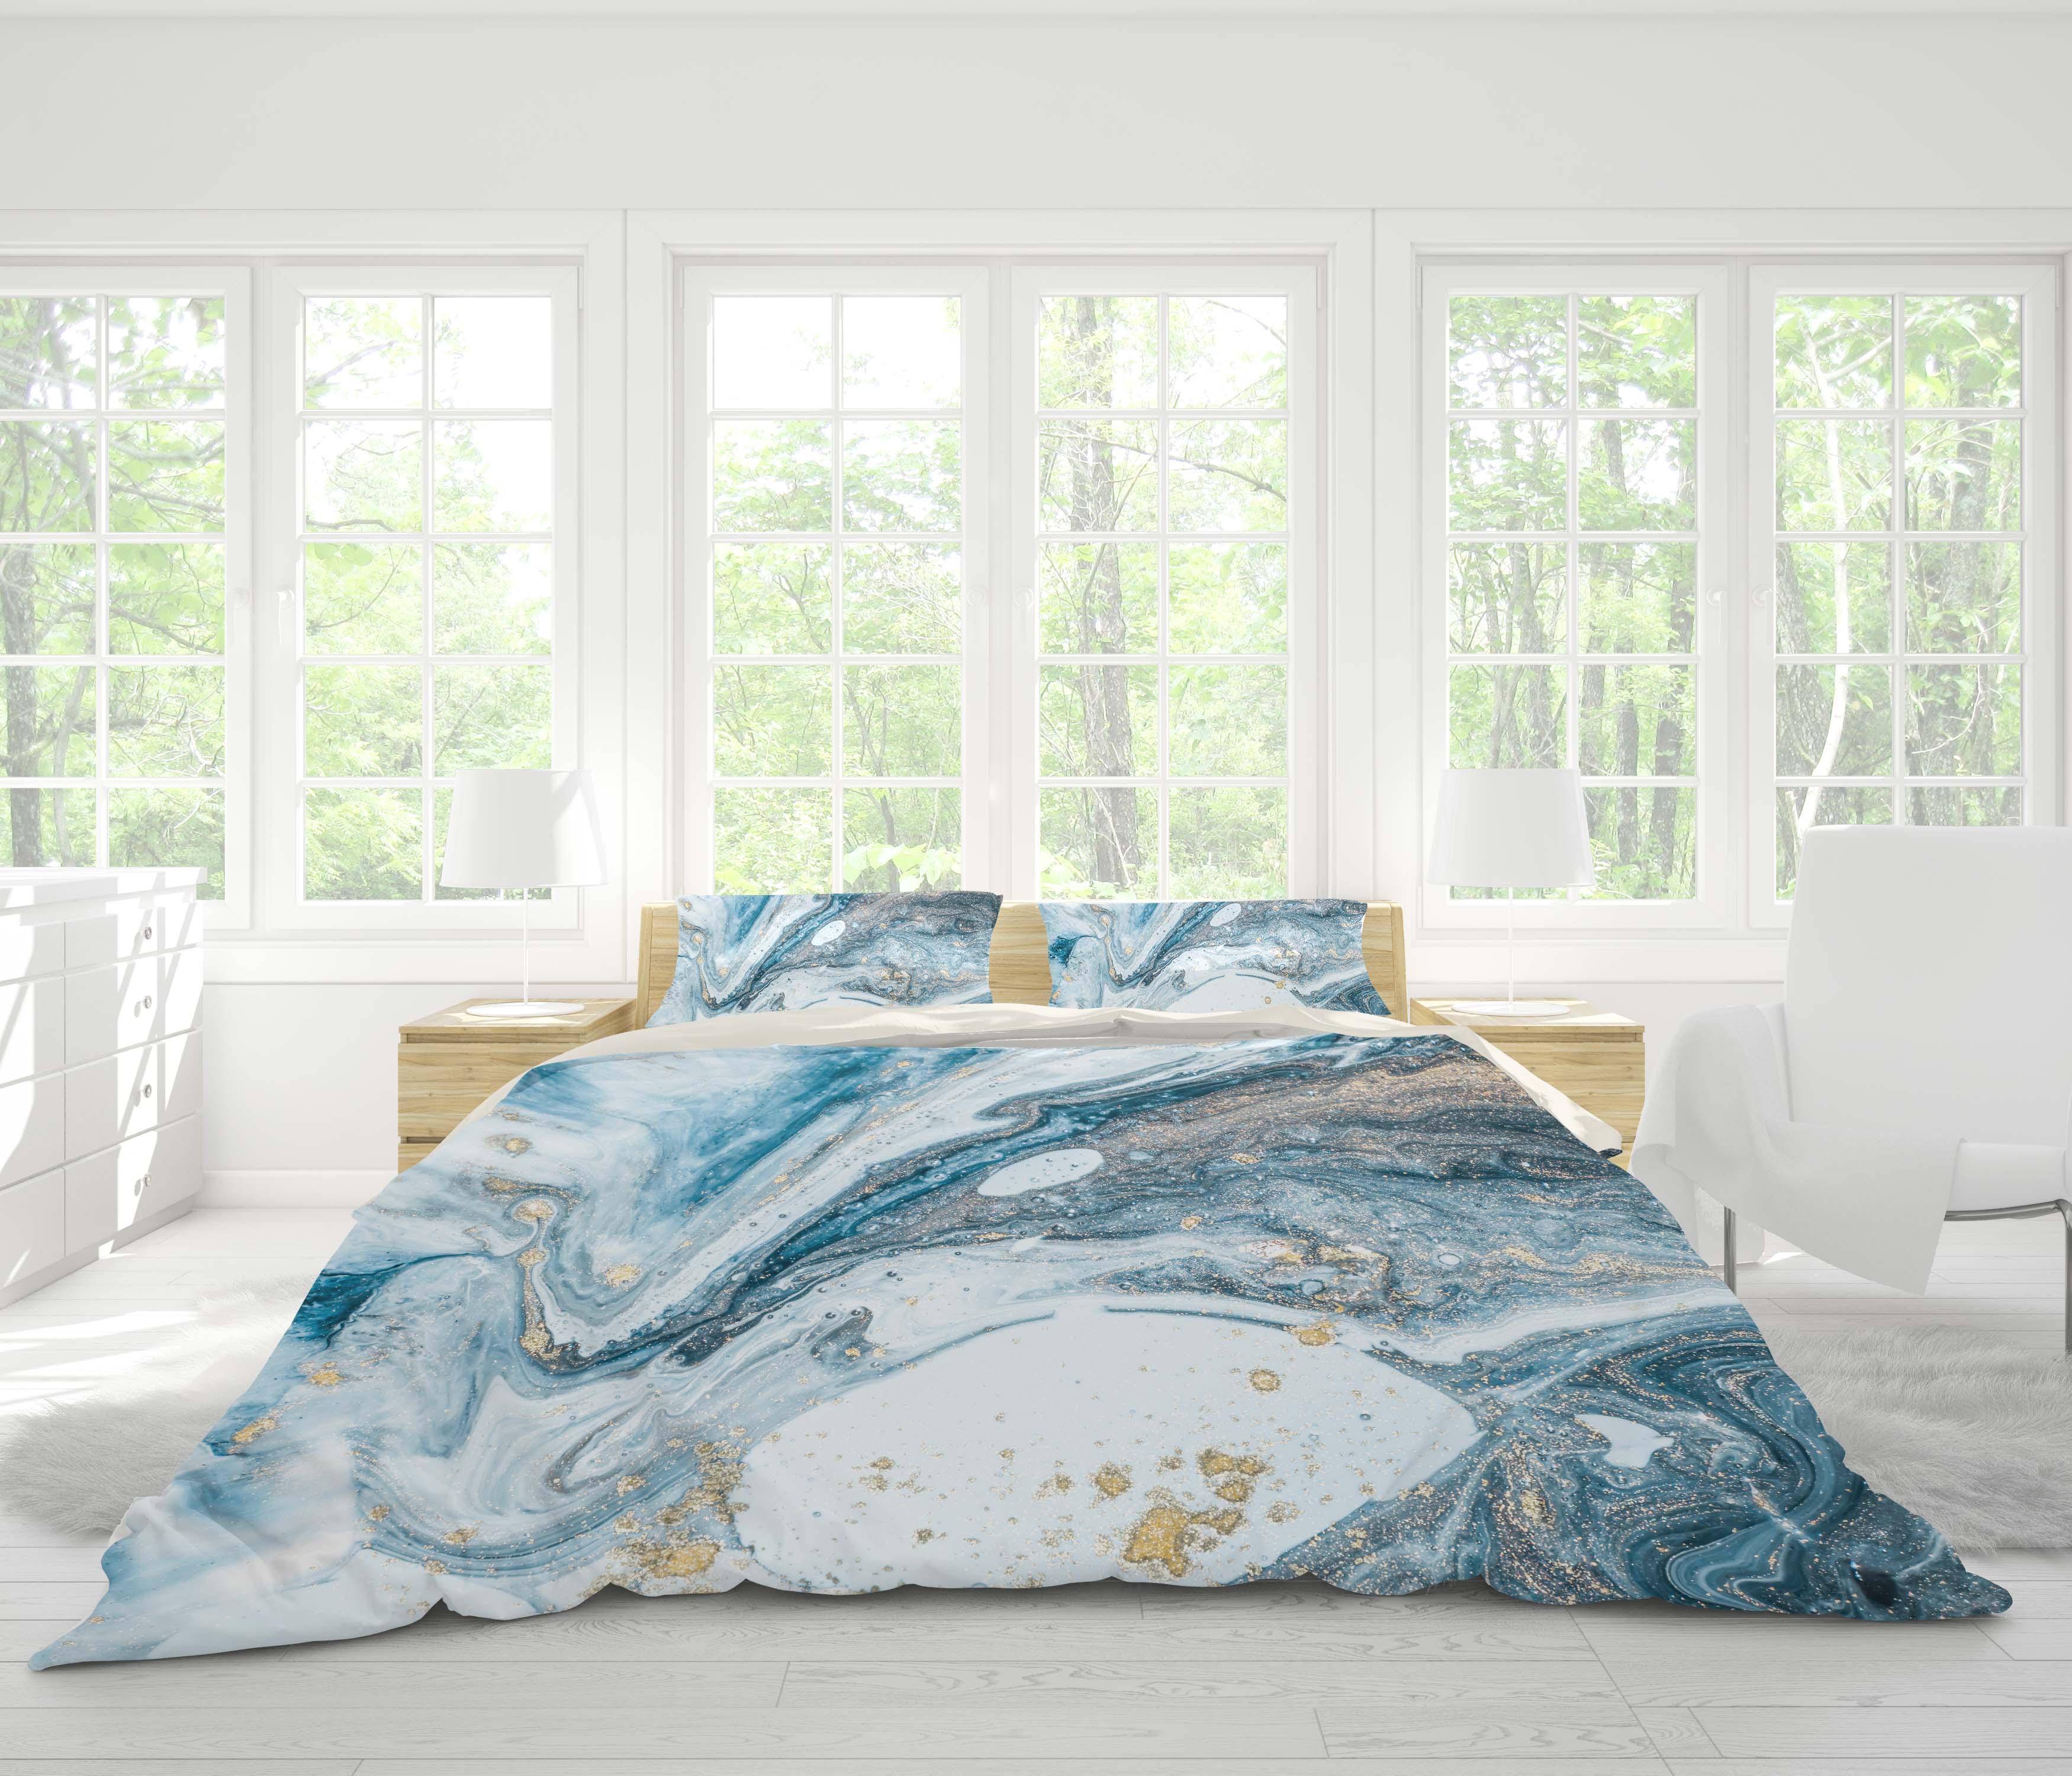 3D Blue Marble Texture Quilt Cover Set Bedding Set Pillowcases 112